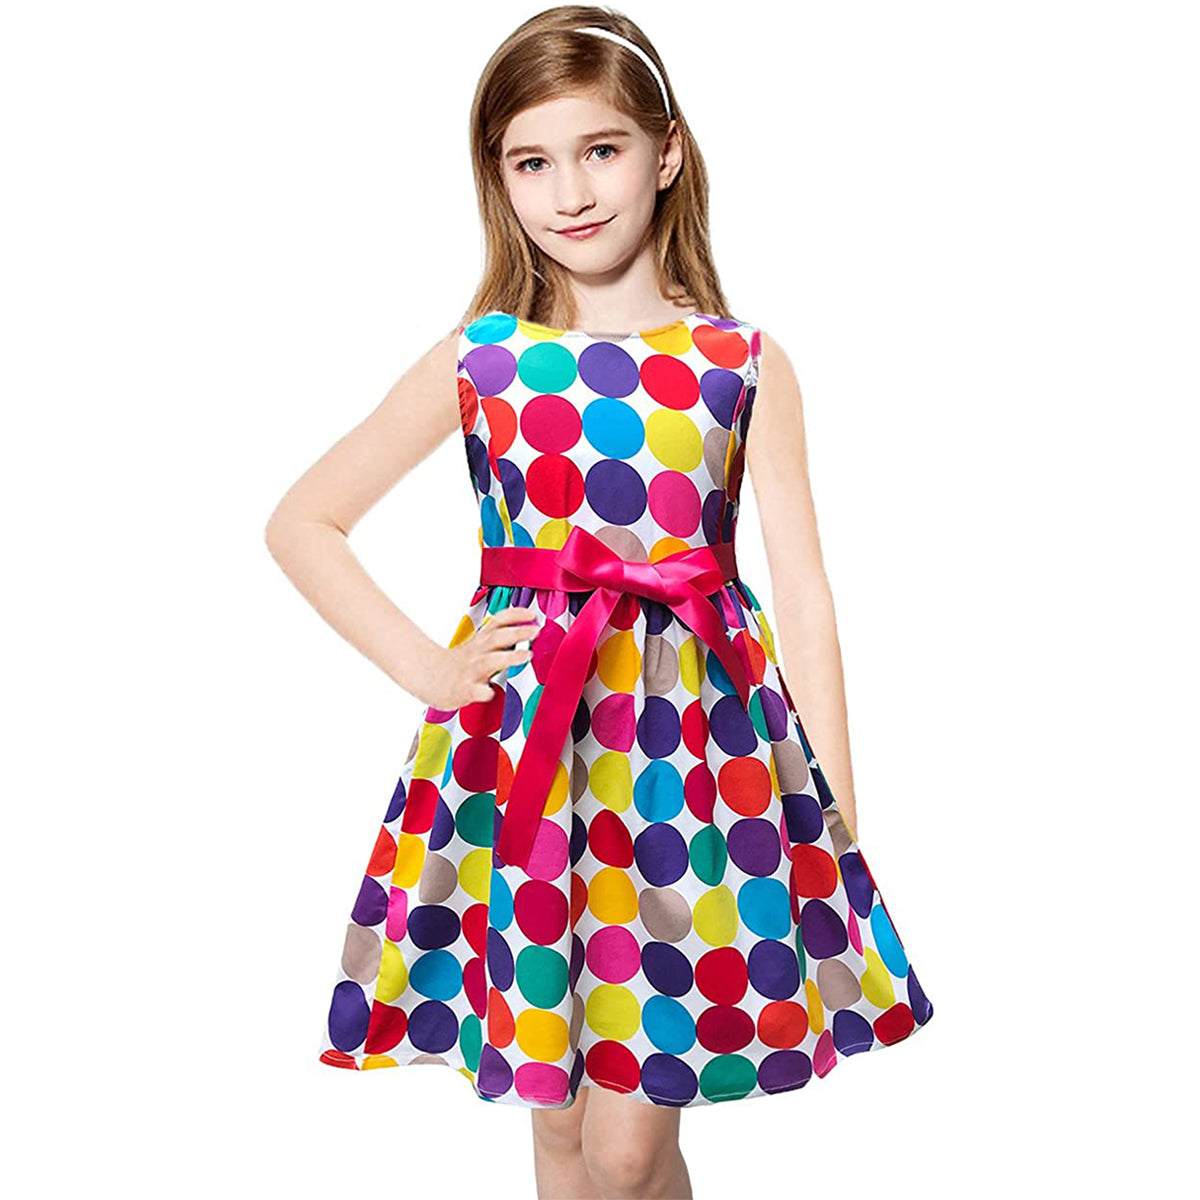 BabyGirl's Multicolour Round Stylish Frocks & Dresses for Kids.